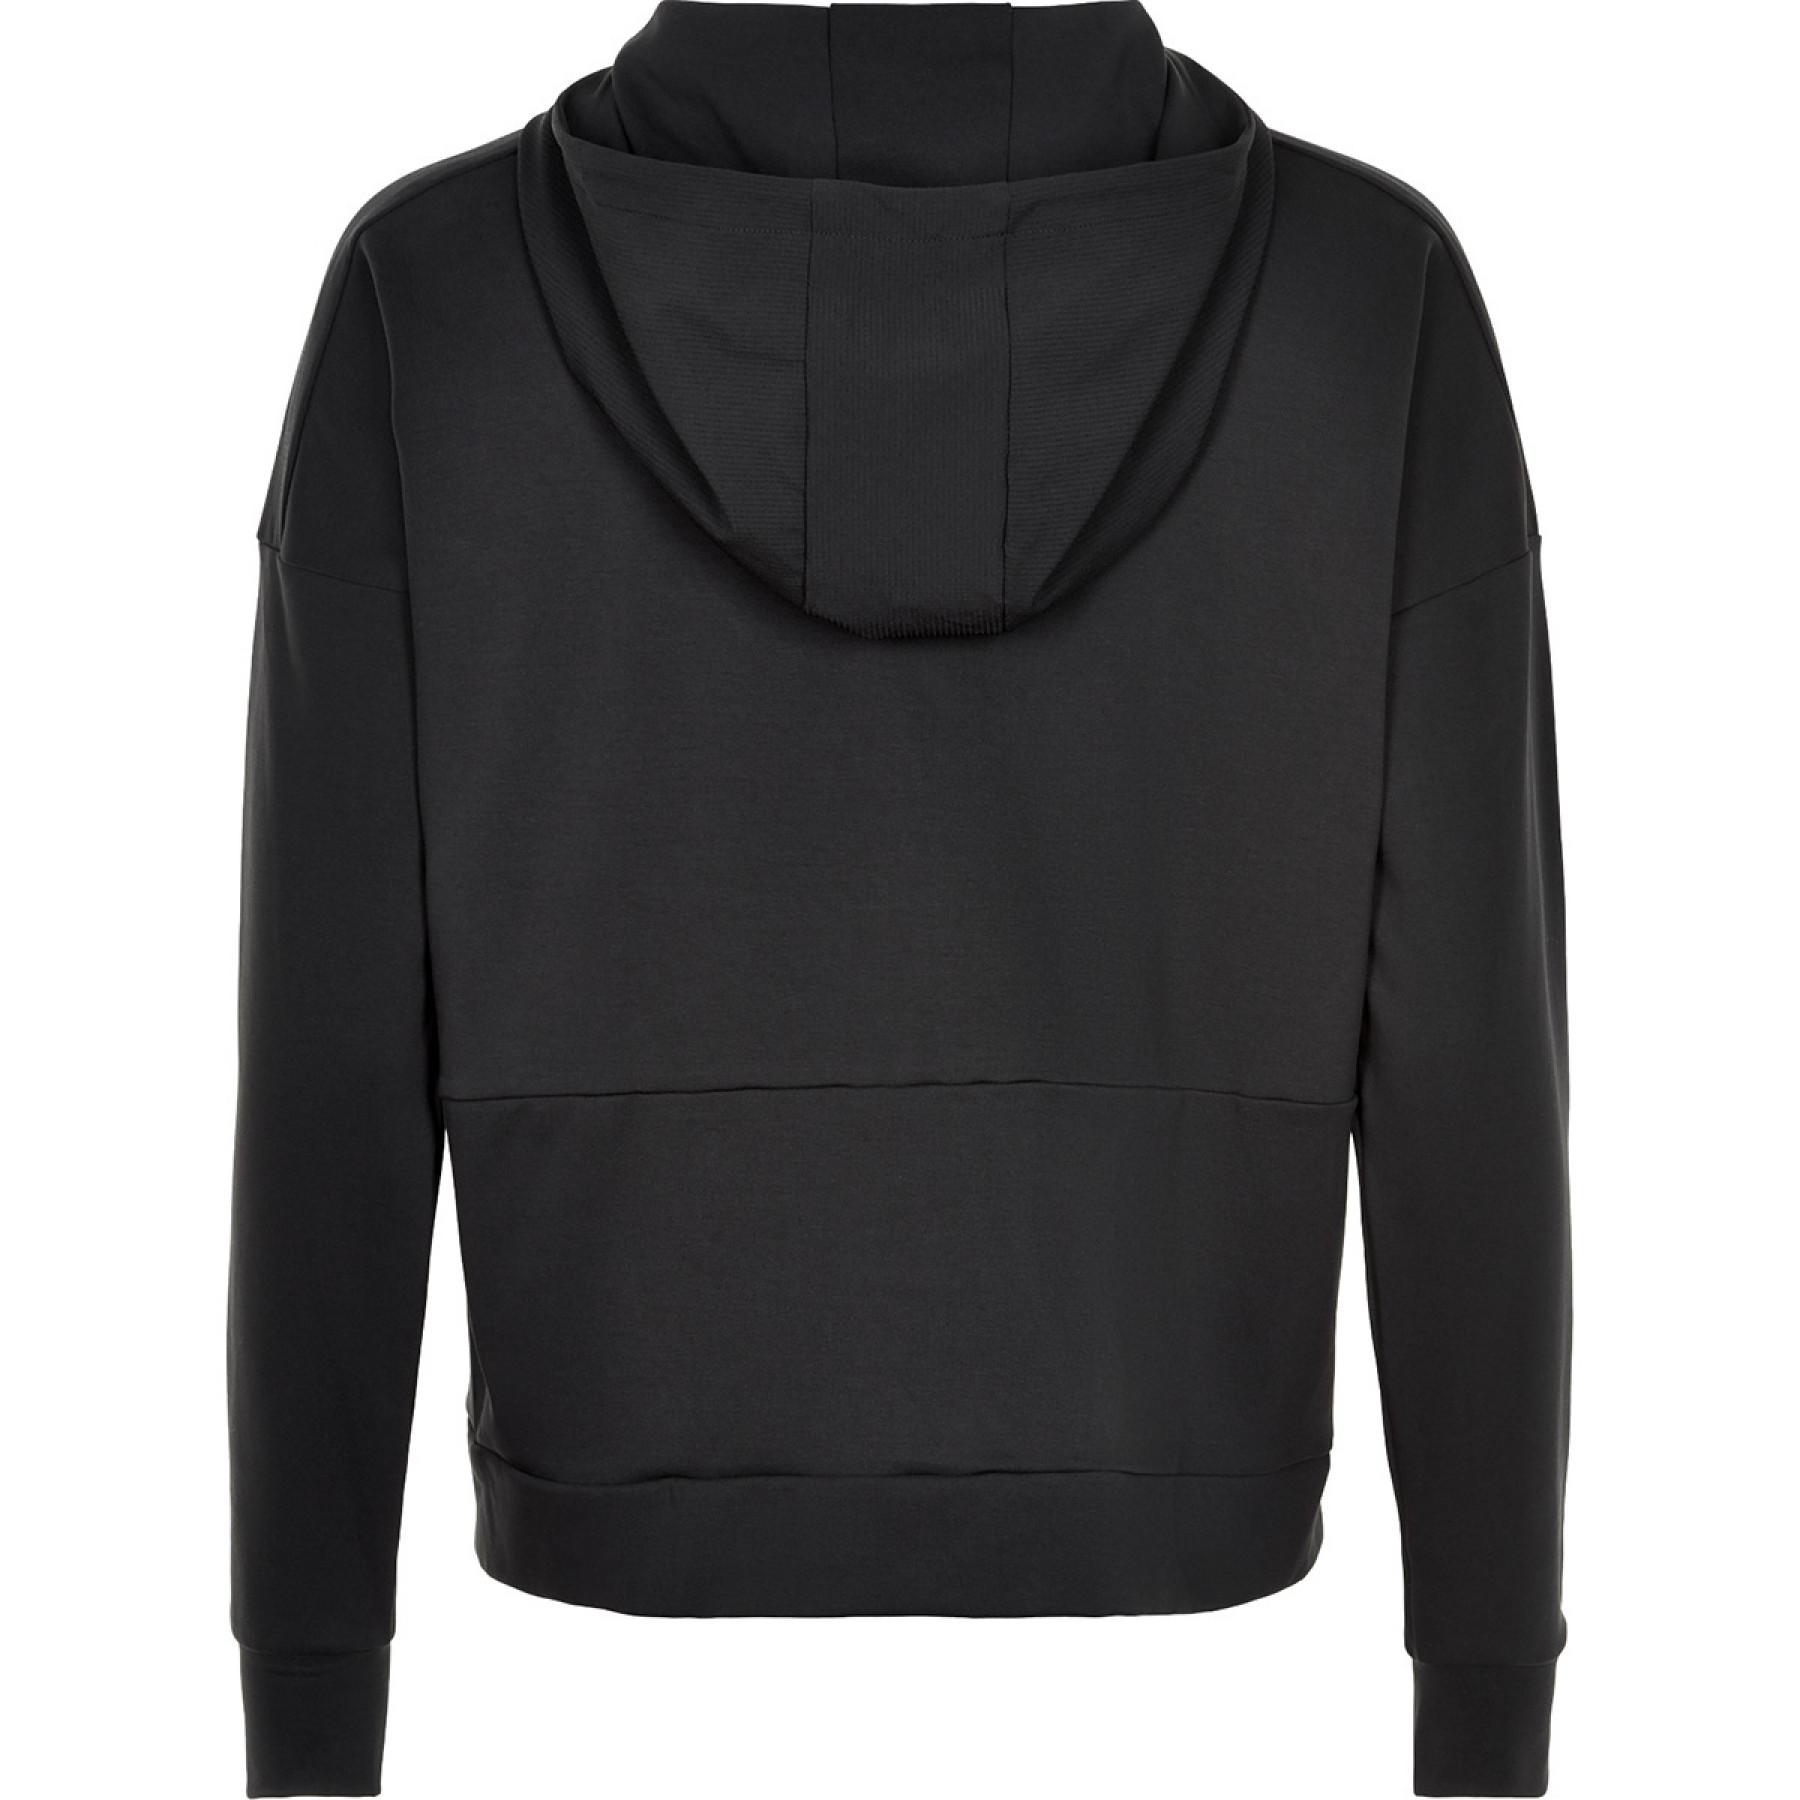 Women's hooded sweatshirt Newline zip thru